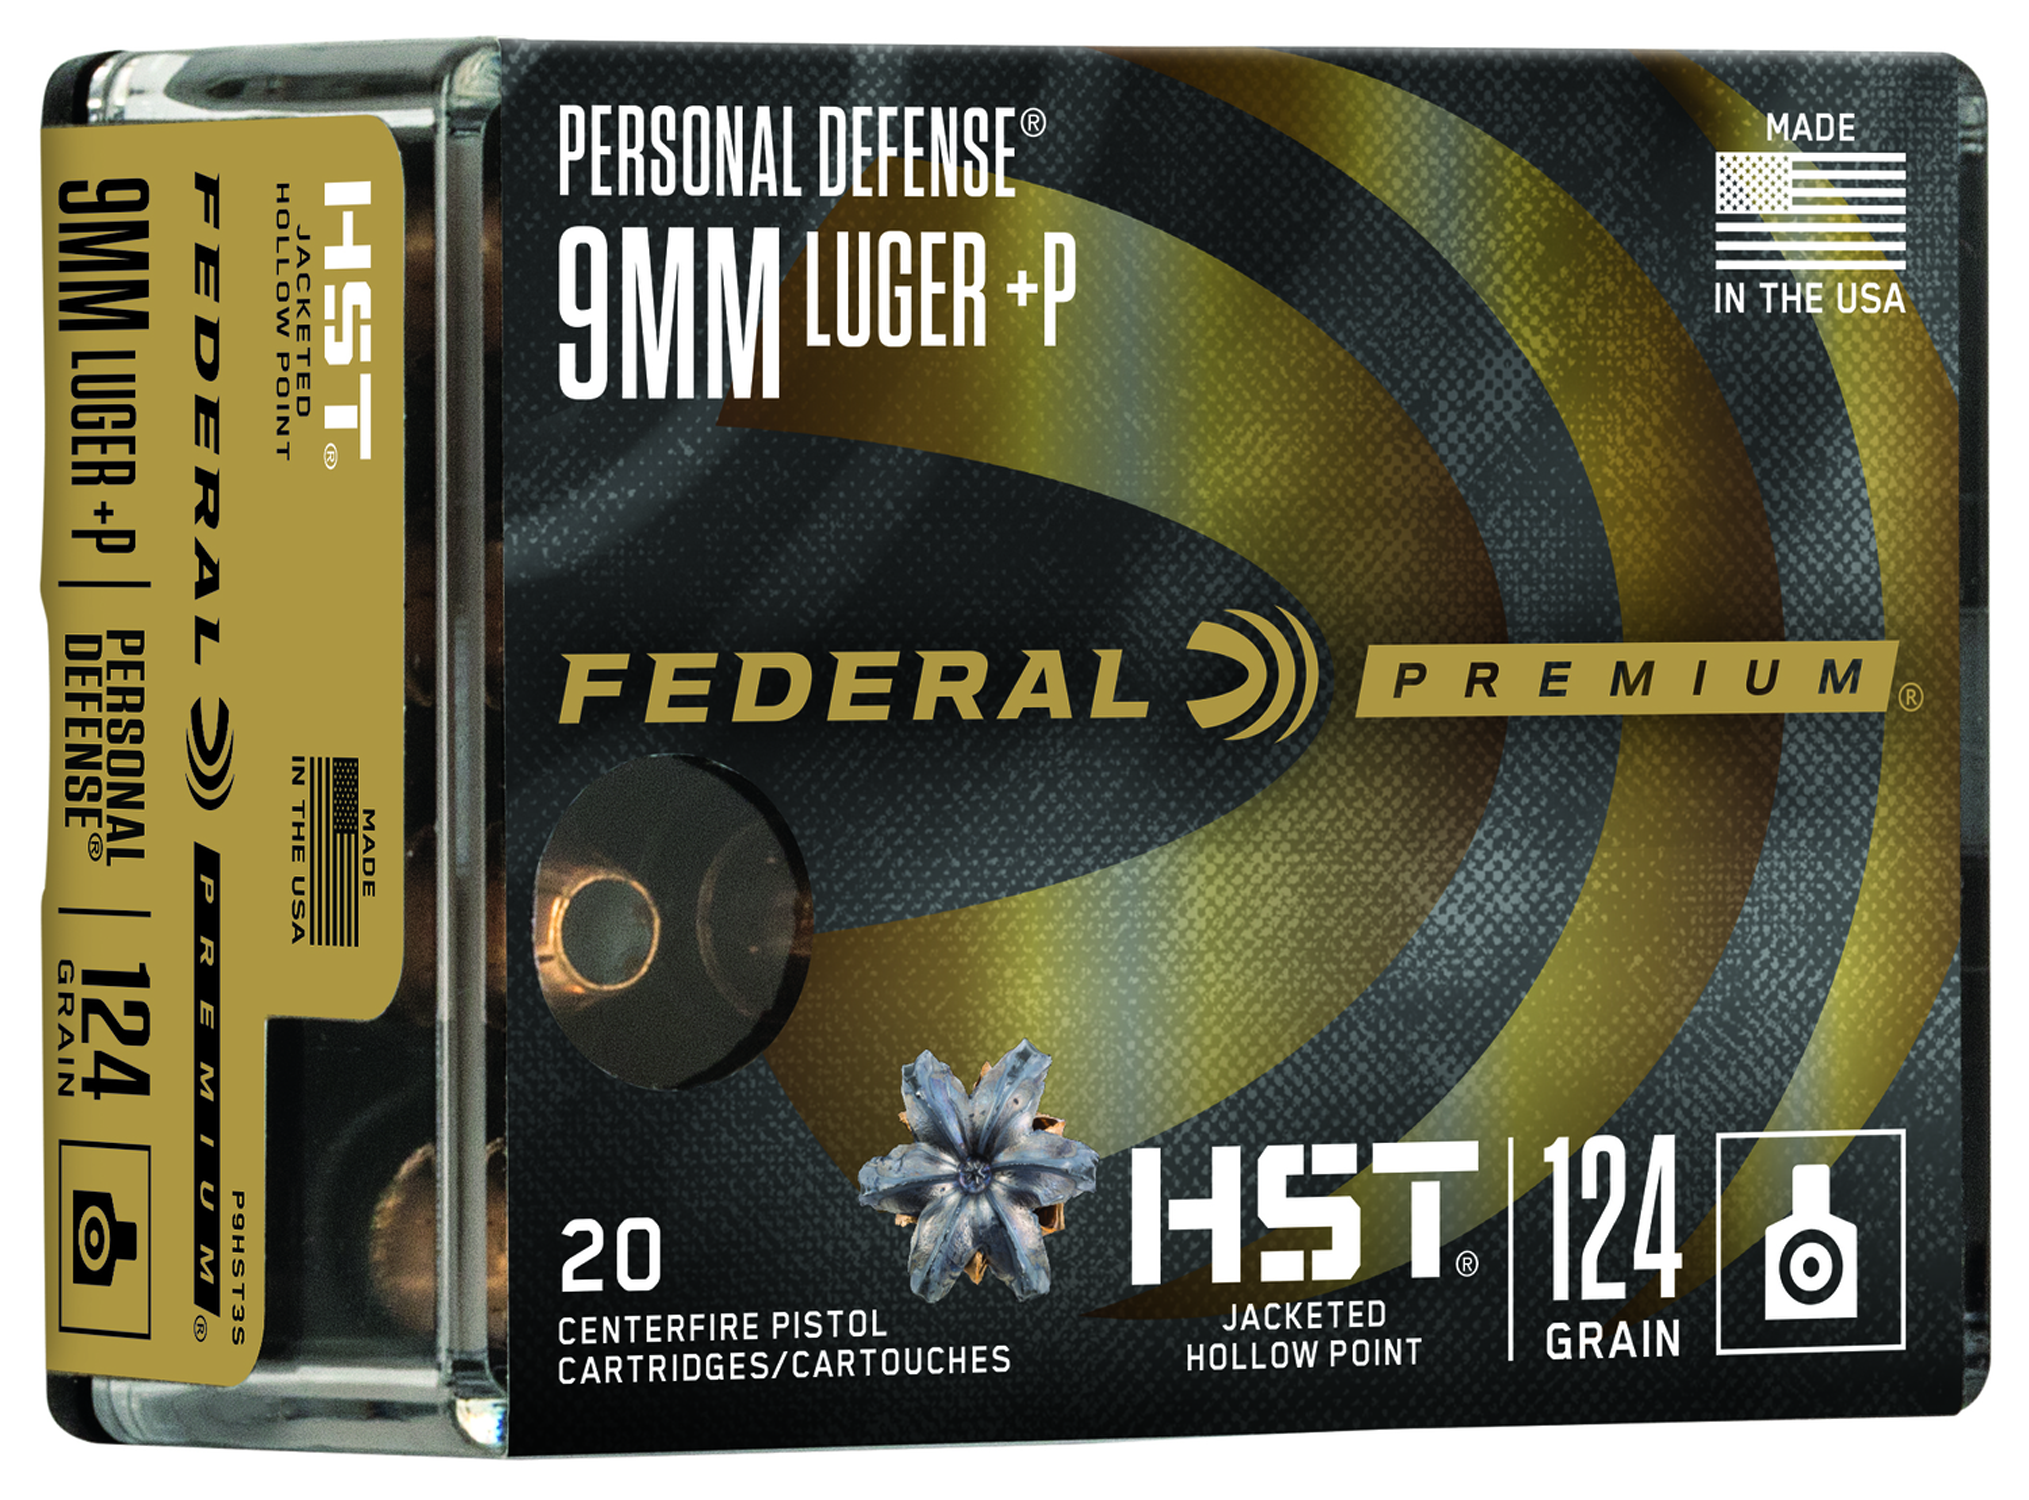 Federal 9x19+P 124 gr. HST JHP Personal Defense